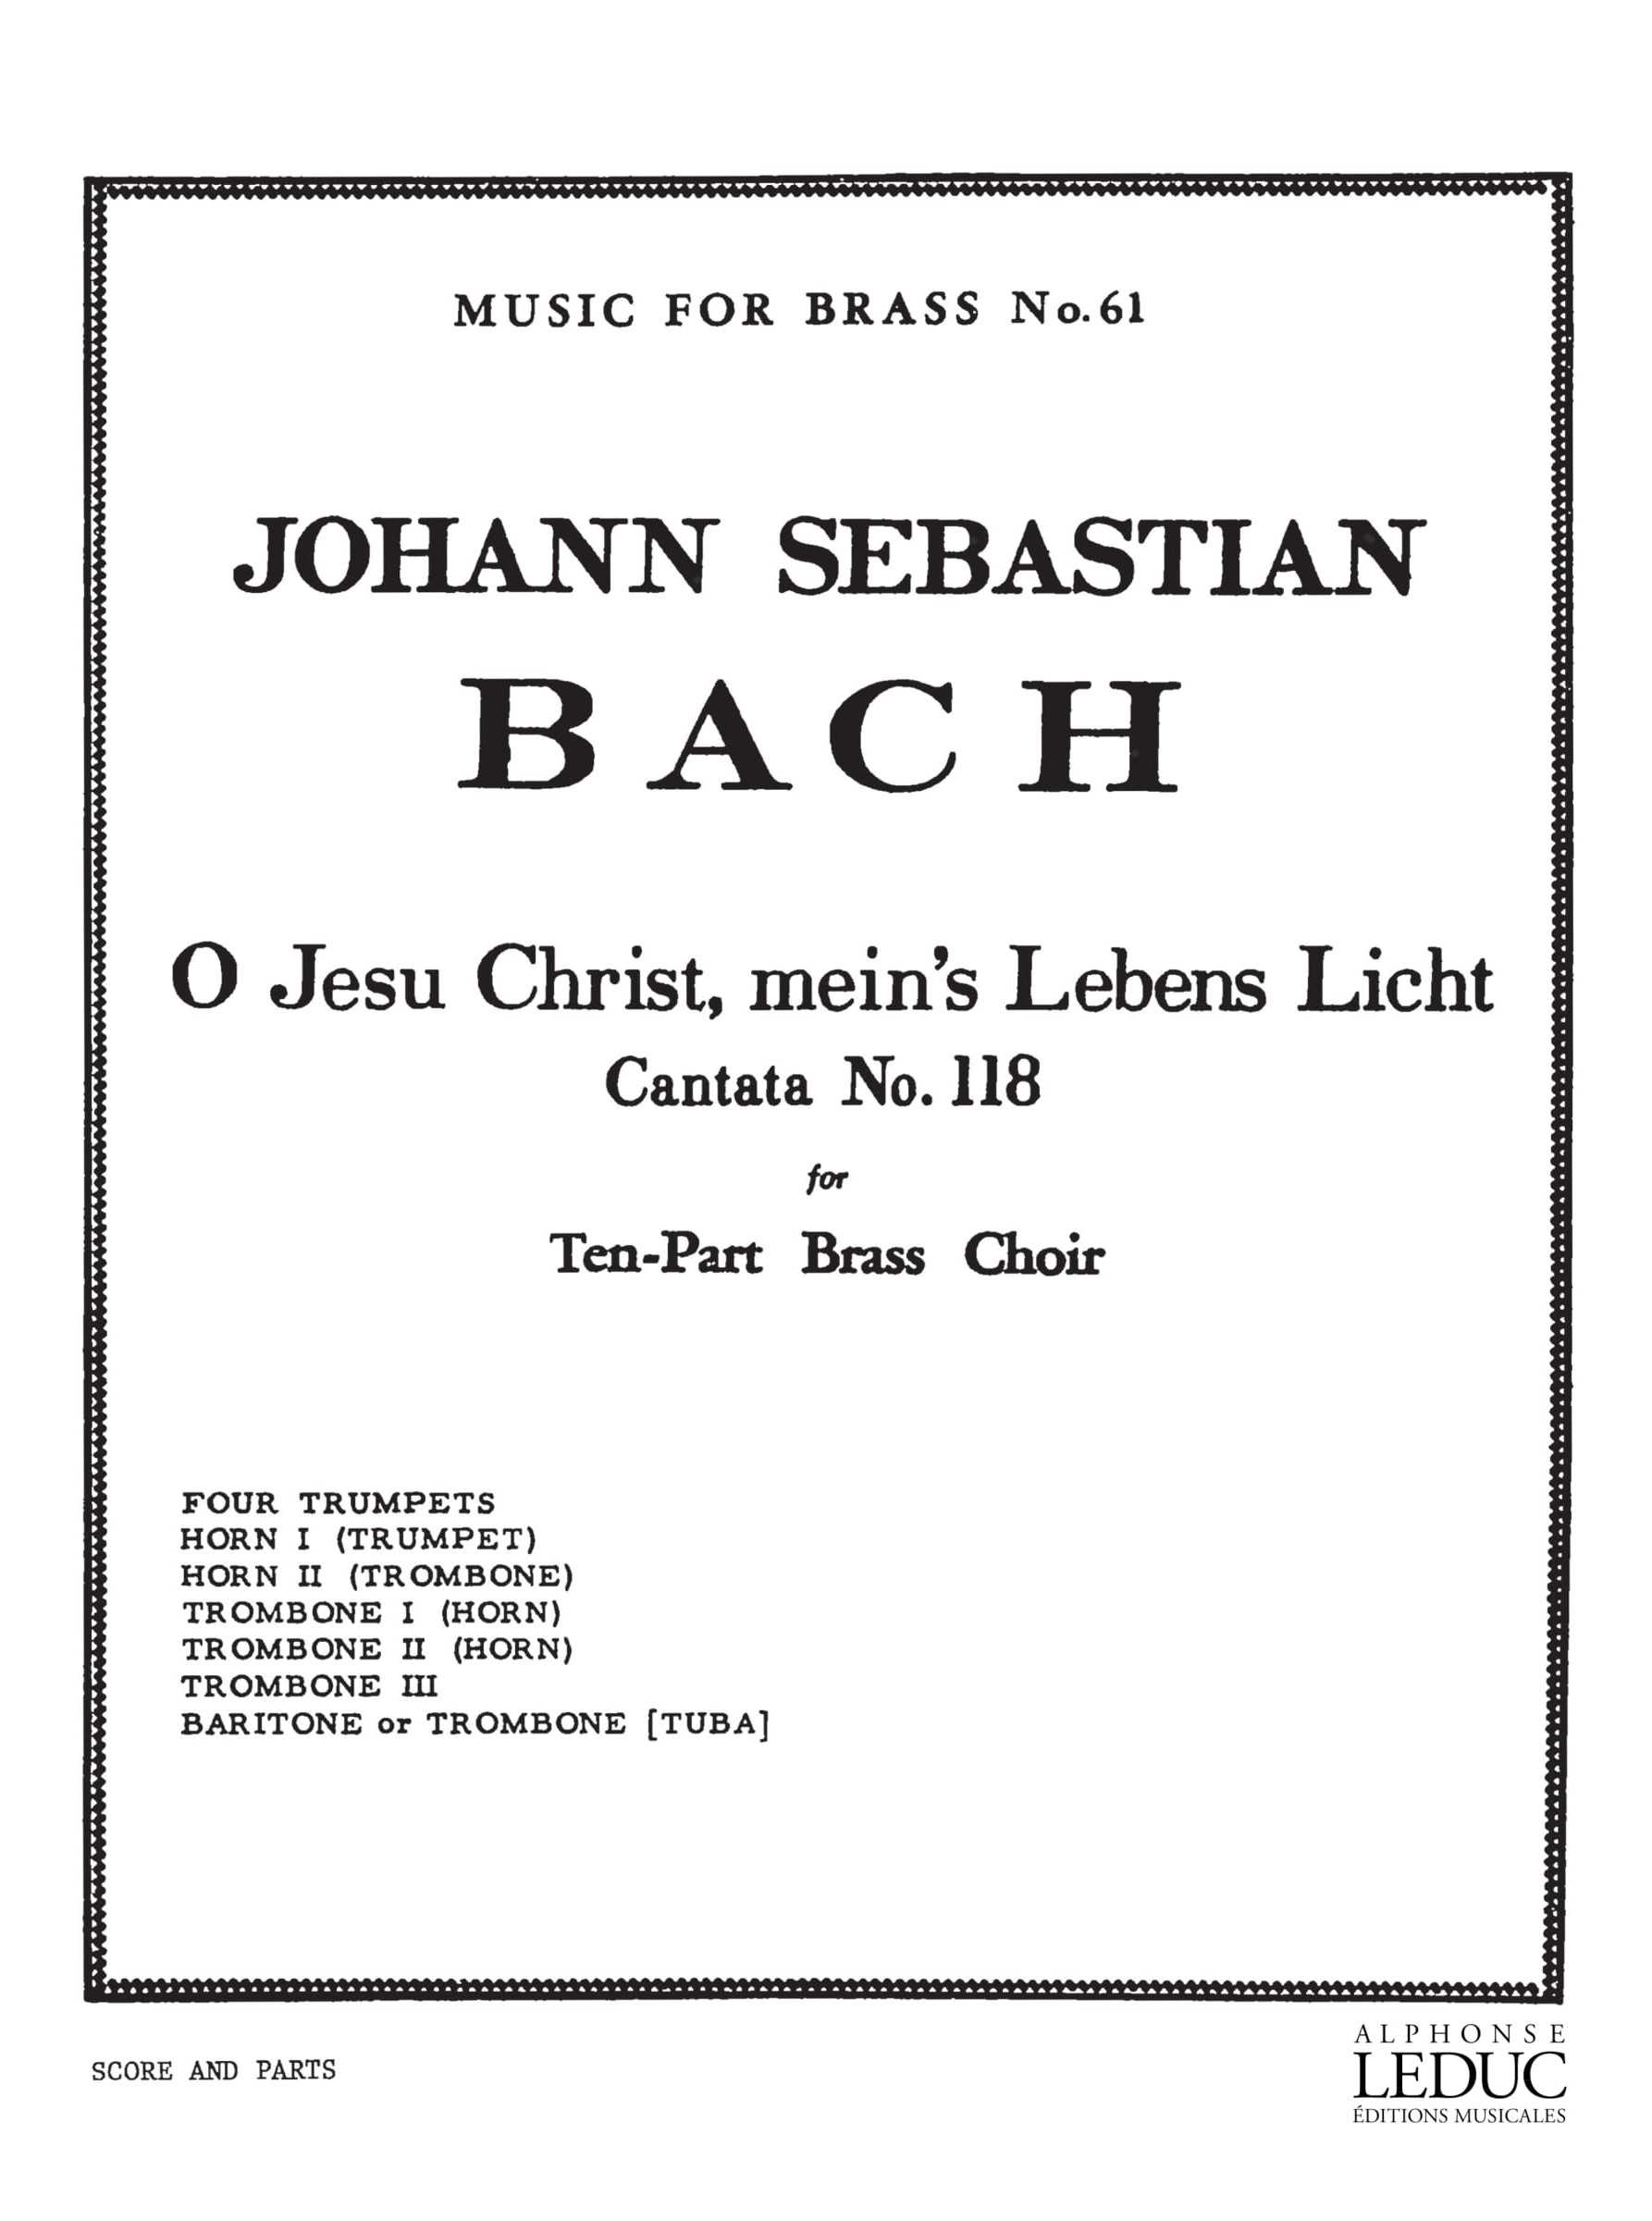 Cantata No.118 